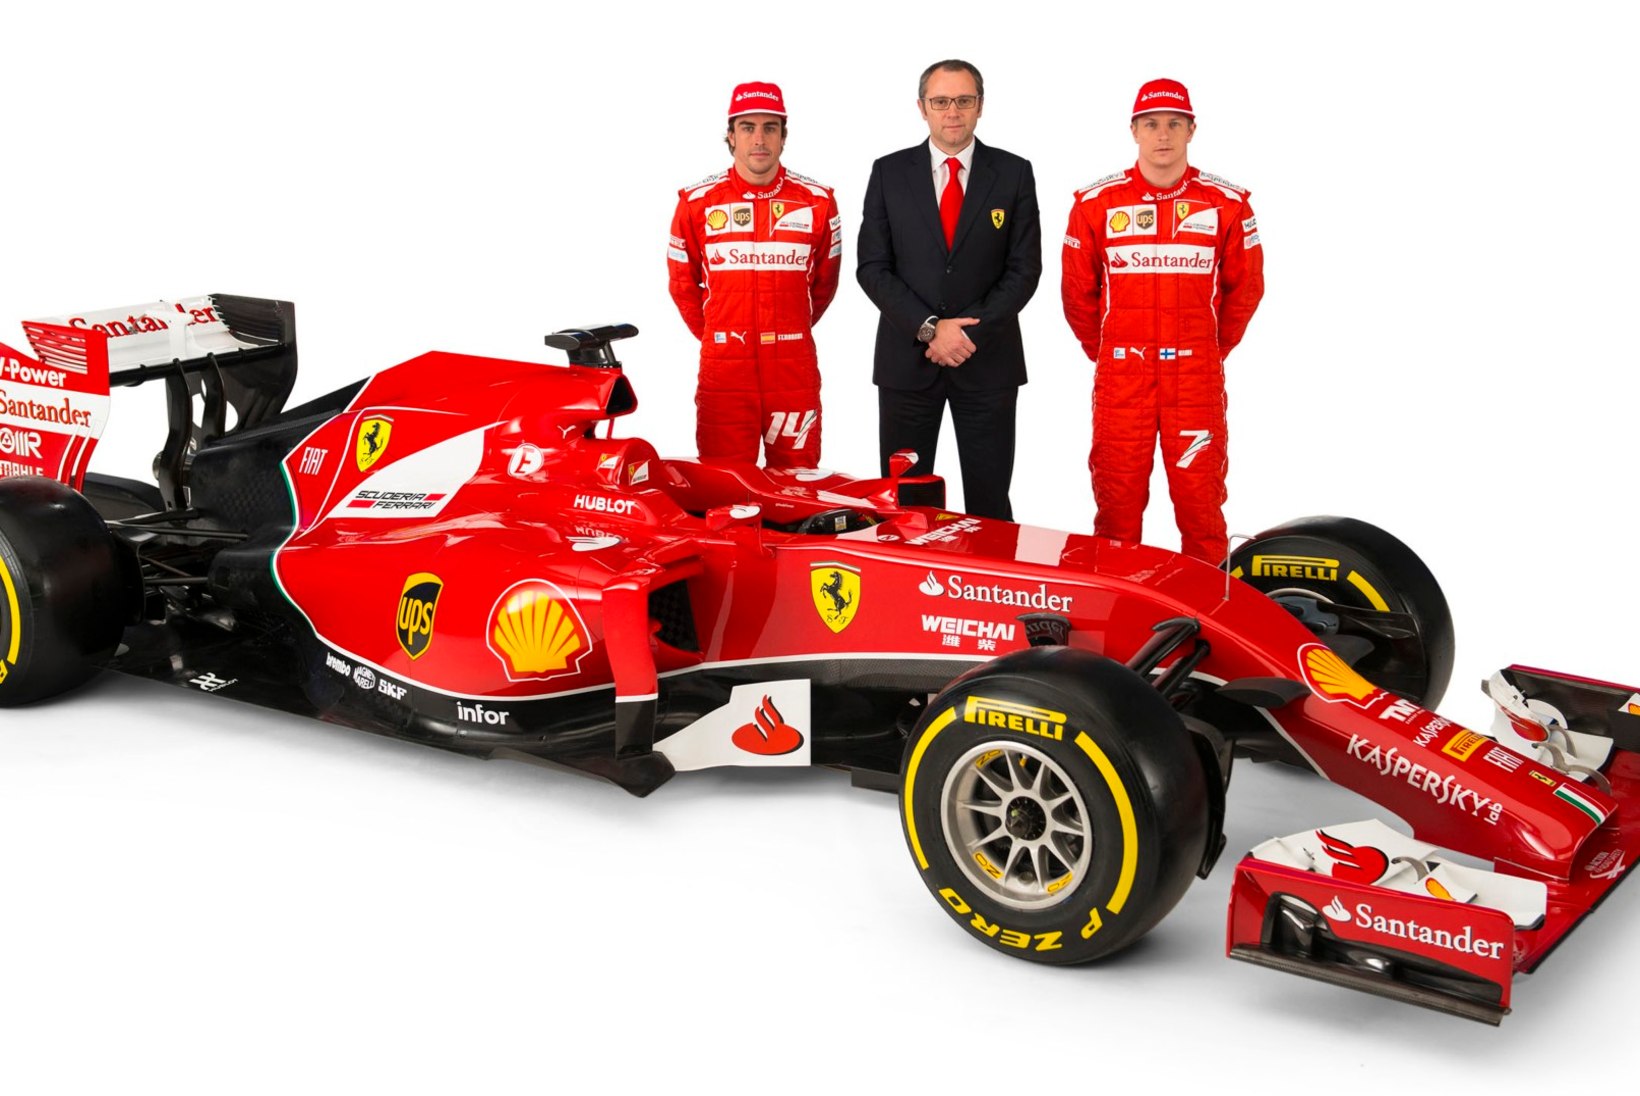 F1: Ferrari pealik Domenicali astus tagasi